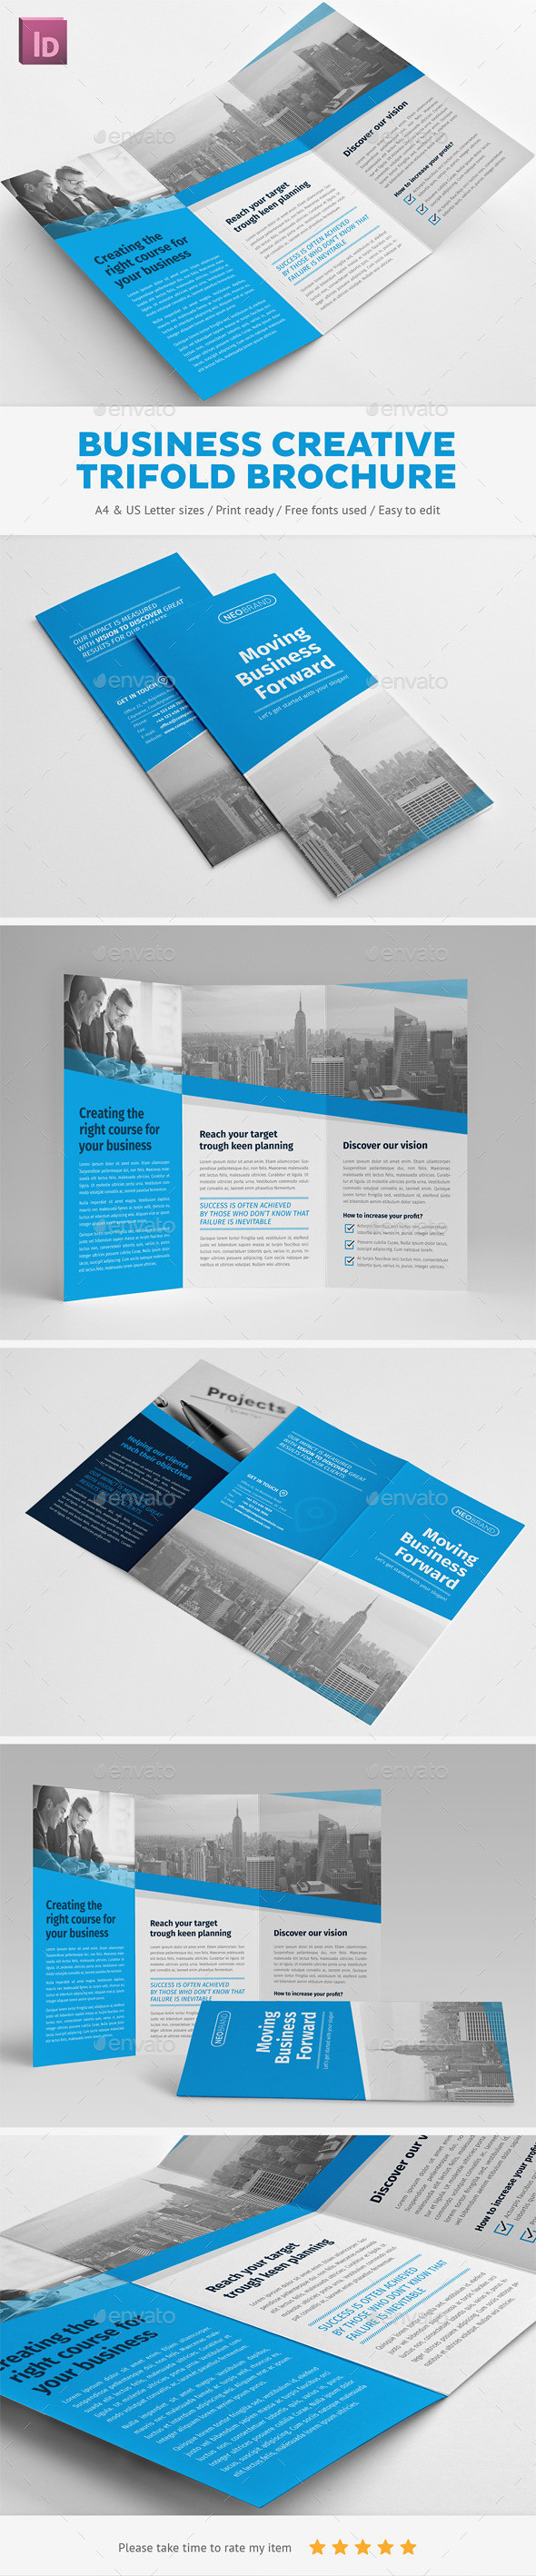 Business creative trifold brochure mockup